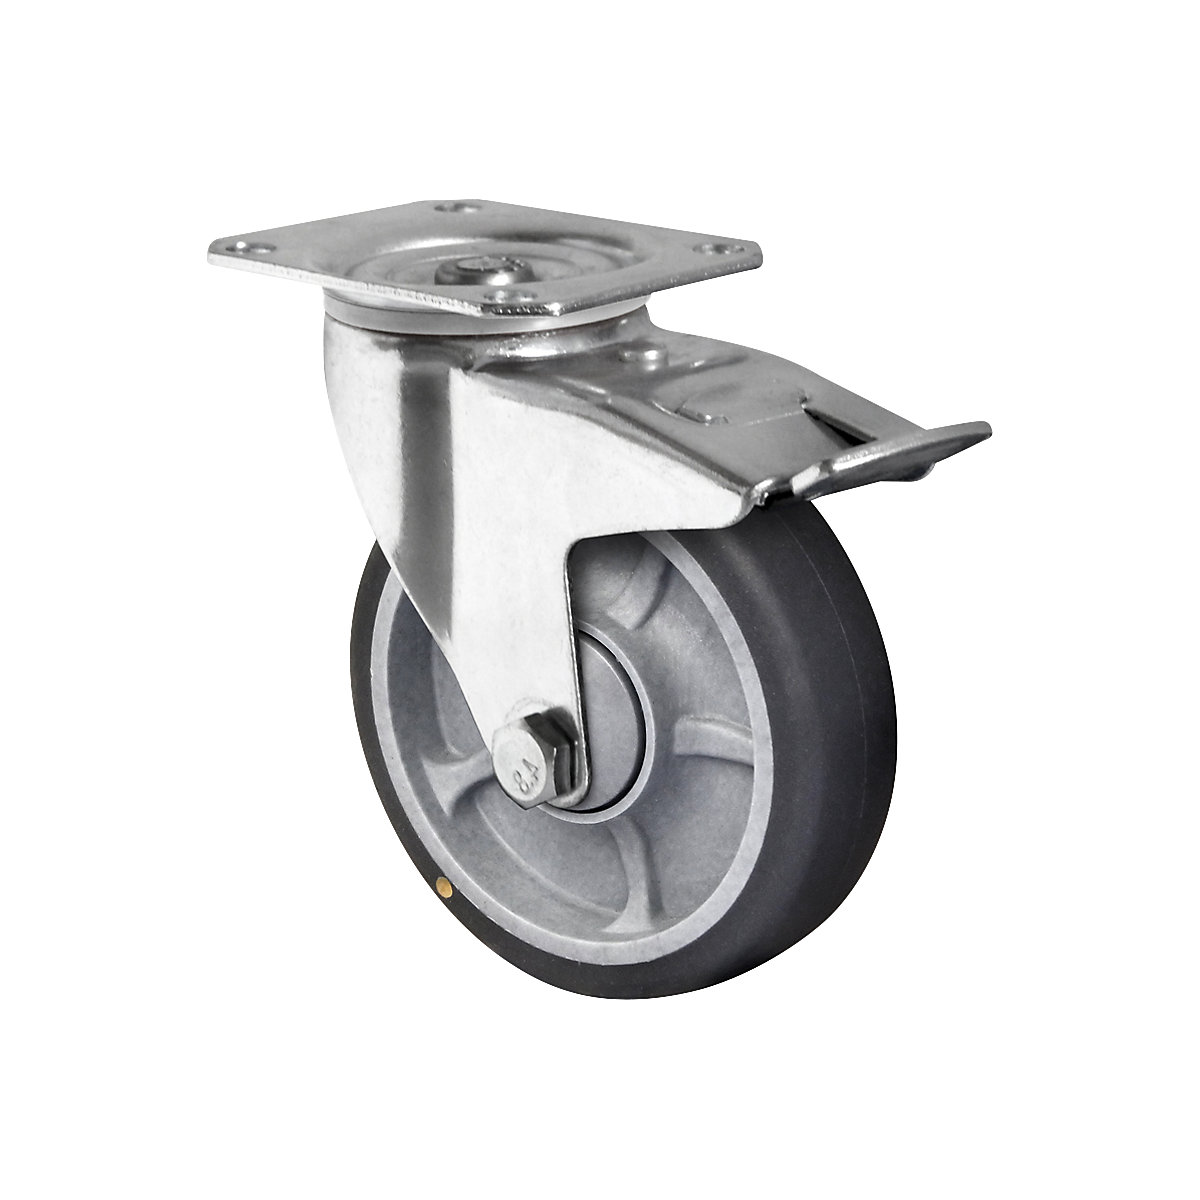 EUROKRAFTbasic – TPE tyres on PP rim, ESD, 2+ items, wheel Ø x width 100 x 32 mm, swivel castor with double stop